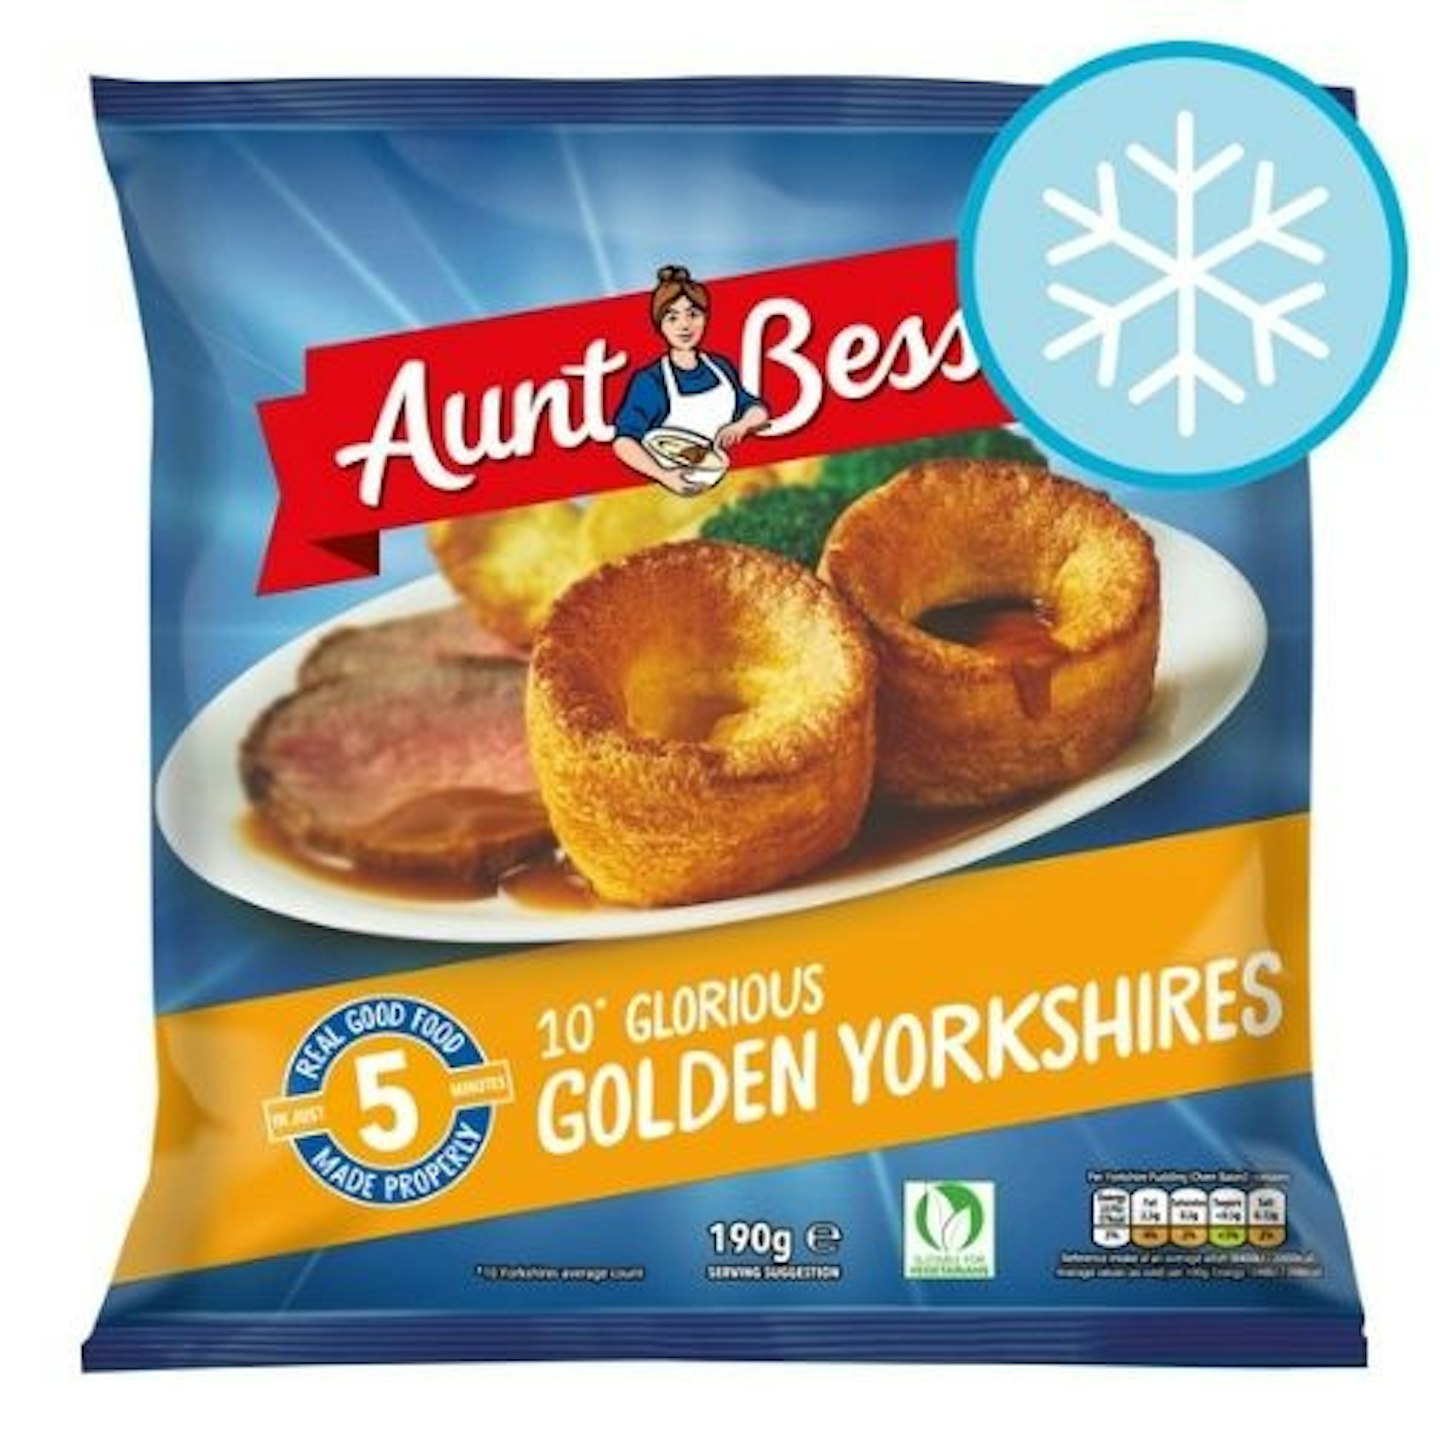 Aunt Bessie's 10 Glorious Golden Yorkshires